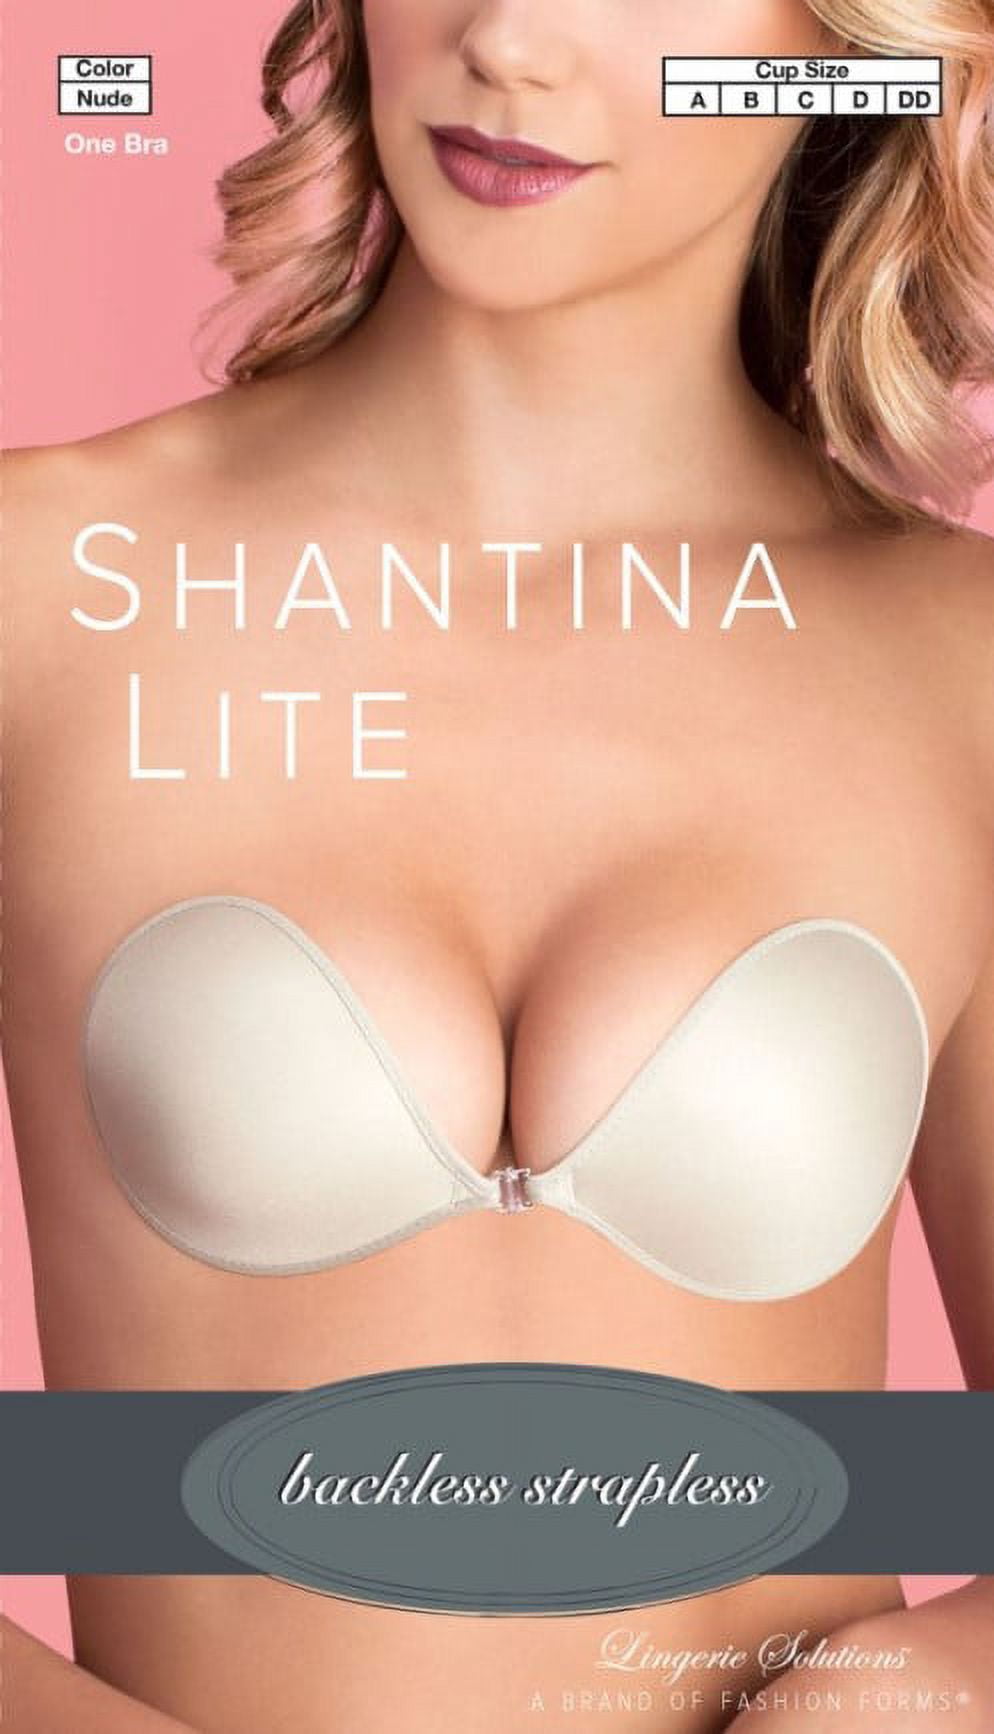 Lingerie Solutions Women's Shantina Backless Strapless Bra Nude 